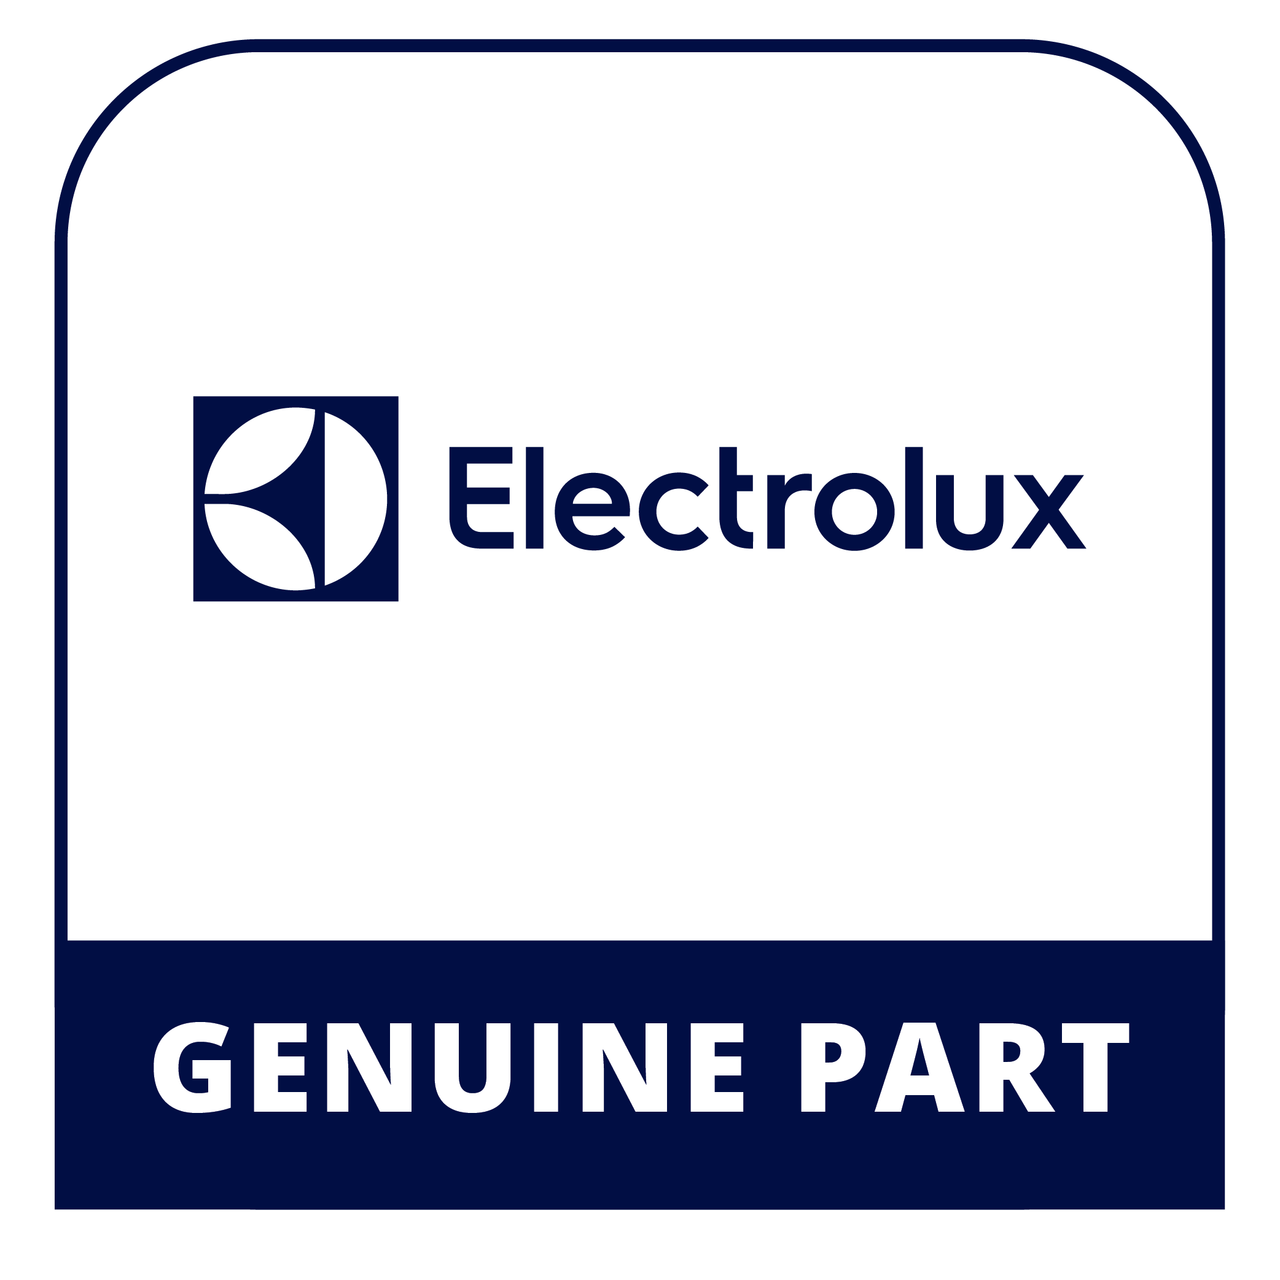 Frigidaire - Electrolux 5304522794 Choke Cover - Genuine Electrolux Part